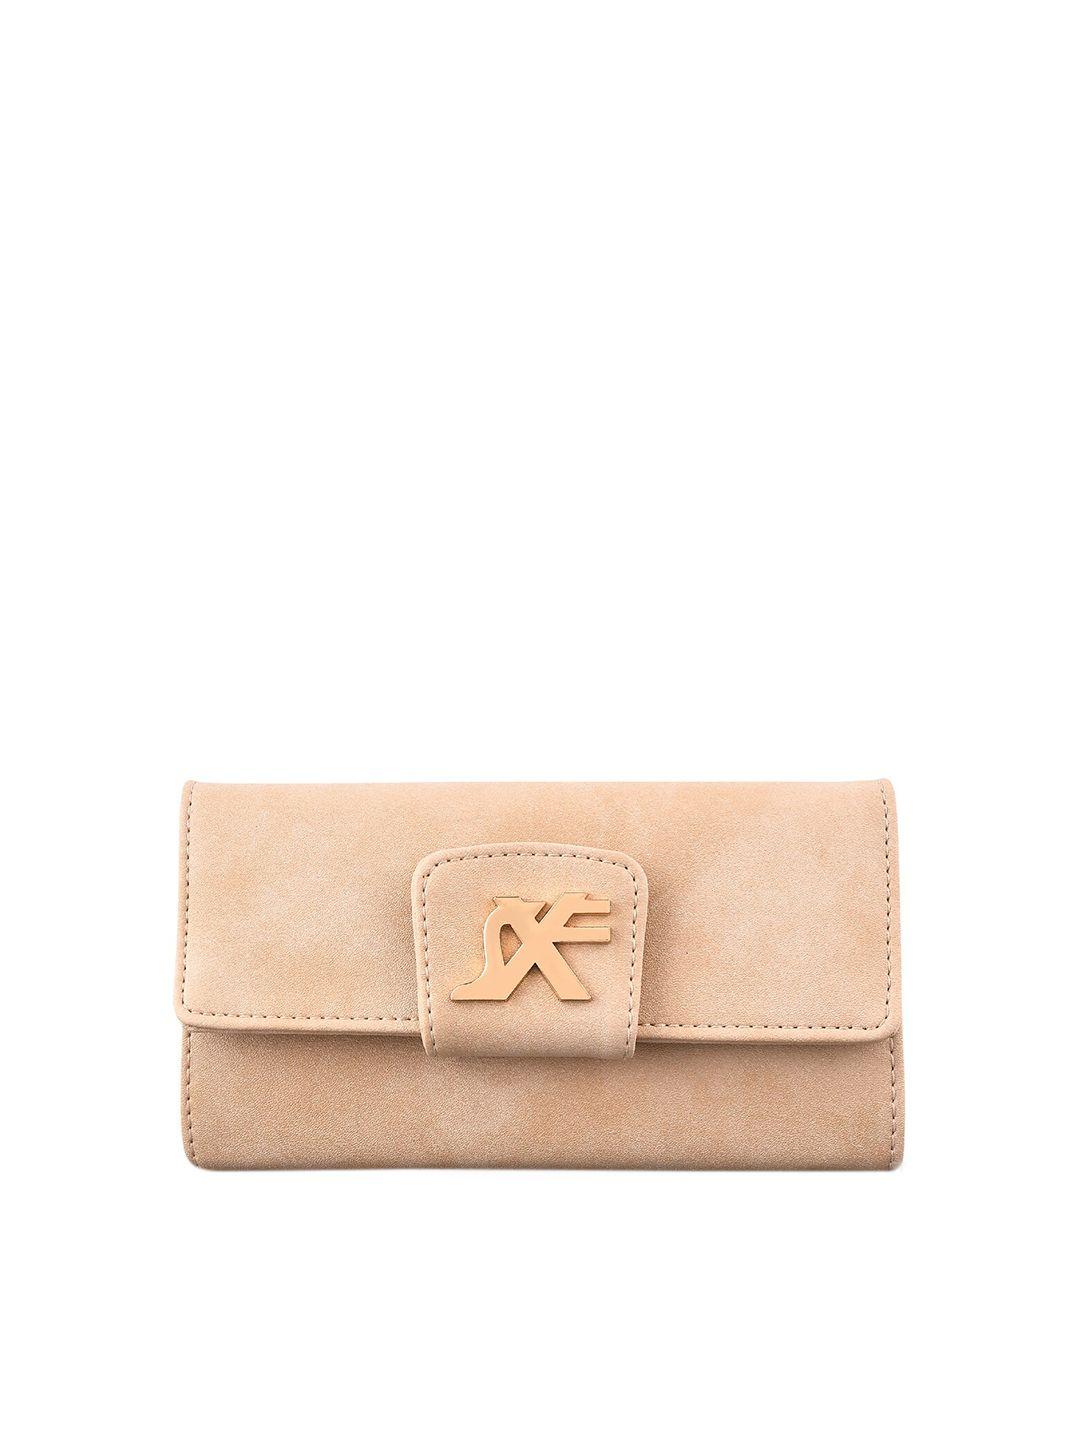 sxf speed x fashion cream-coloured purse clutch